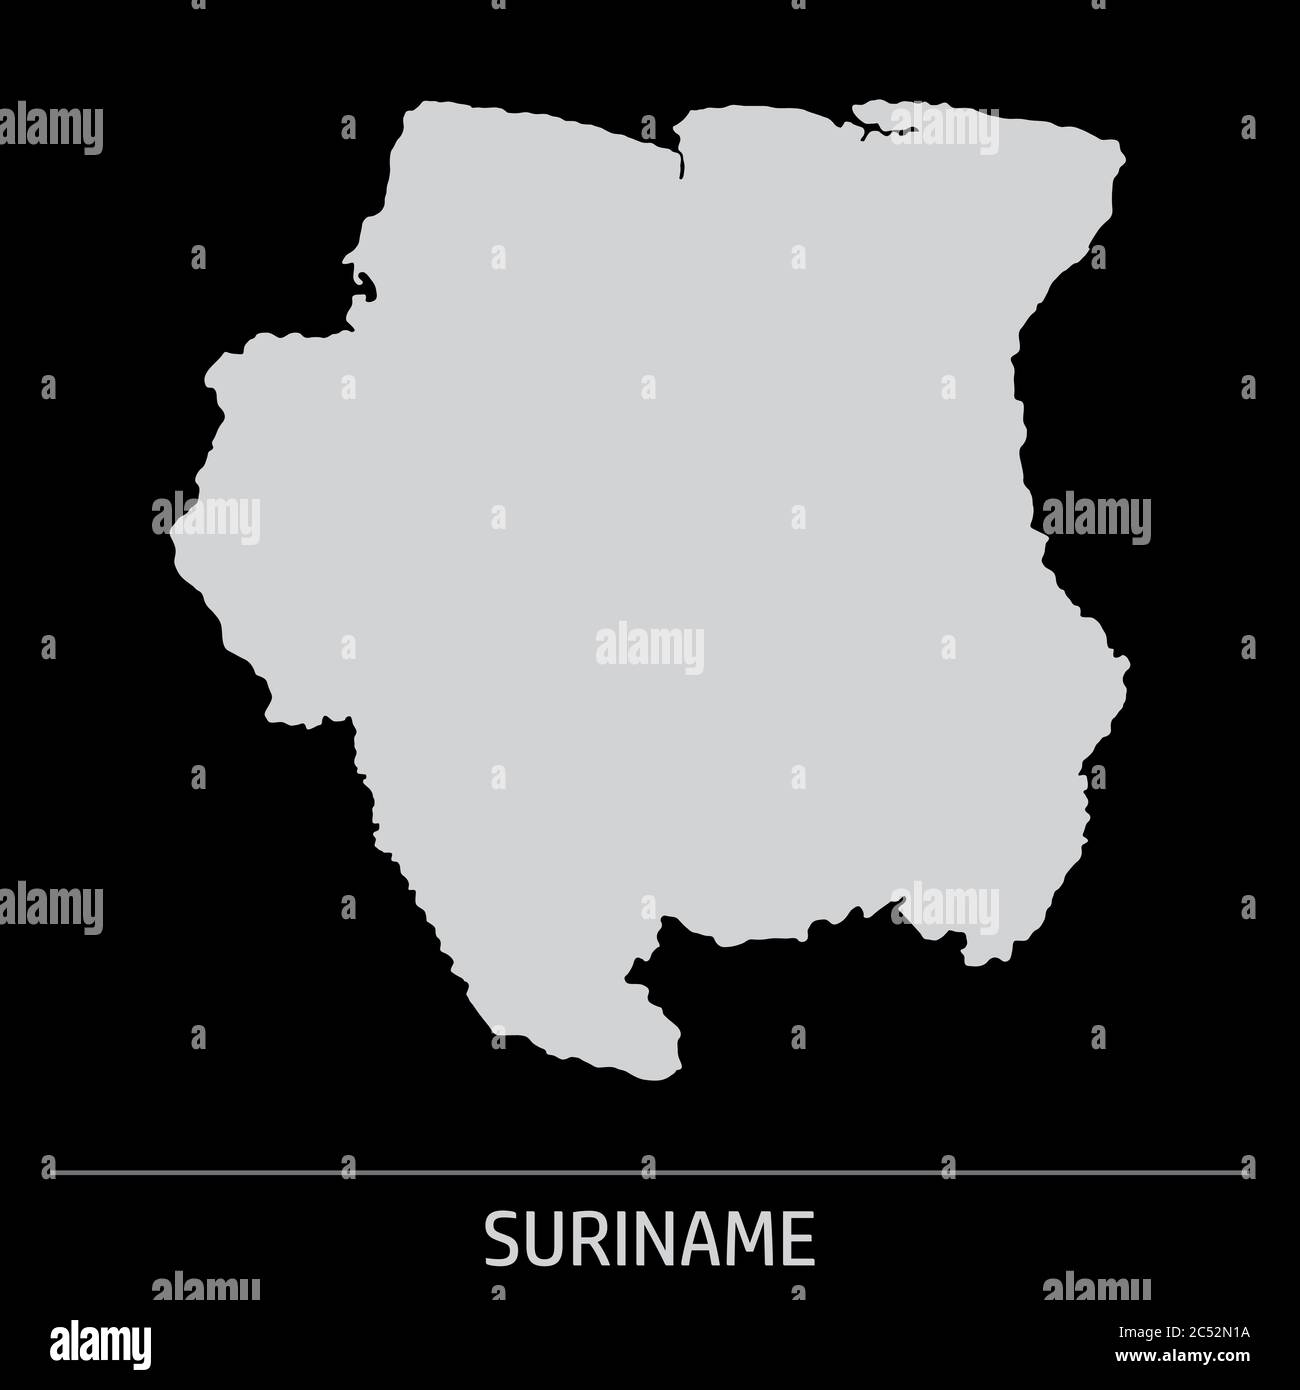 Suriname map icon Stock Vector